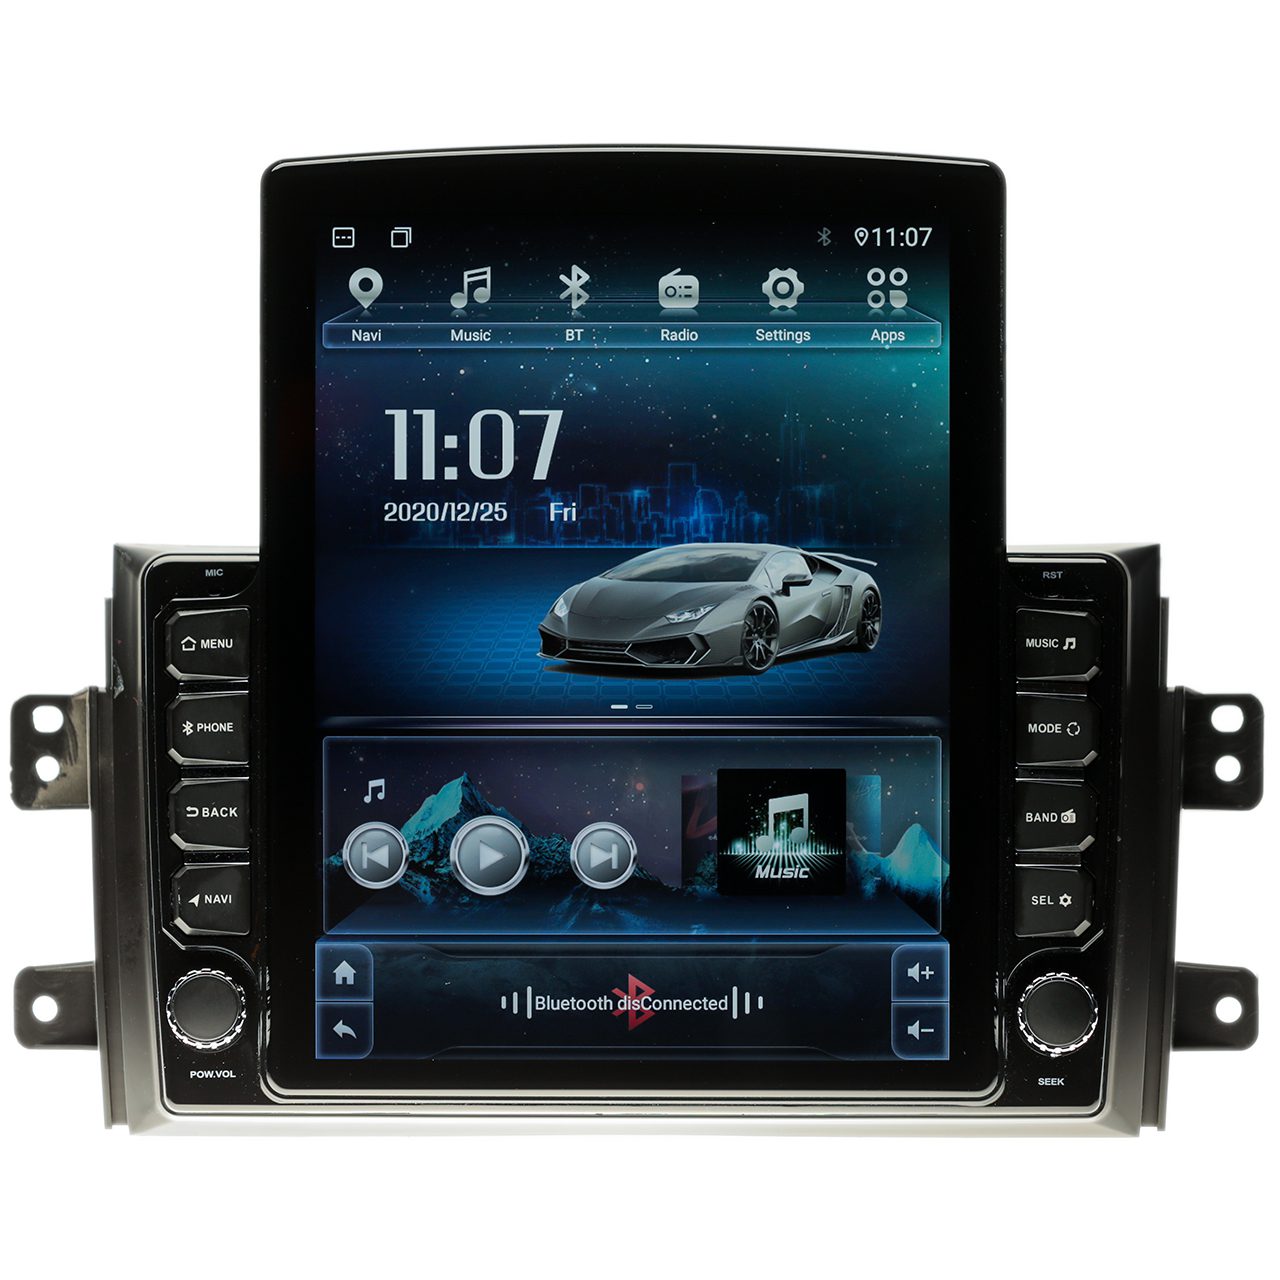 Navigatie AUTONAV PLUS Android GPS Dedicata Suzuki SX4 2006-2014, Model XPERT Memorie 16GB Stocare, 1GB DDR3 RAM, Butoane Si Volum Fizice, Display Vertical Stil Tesla 10